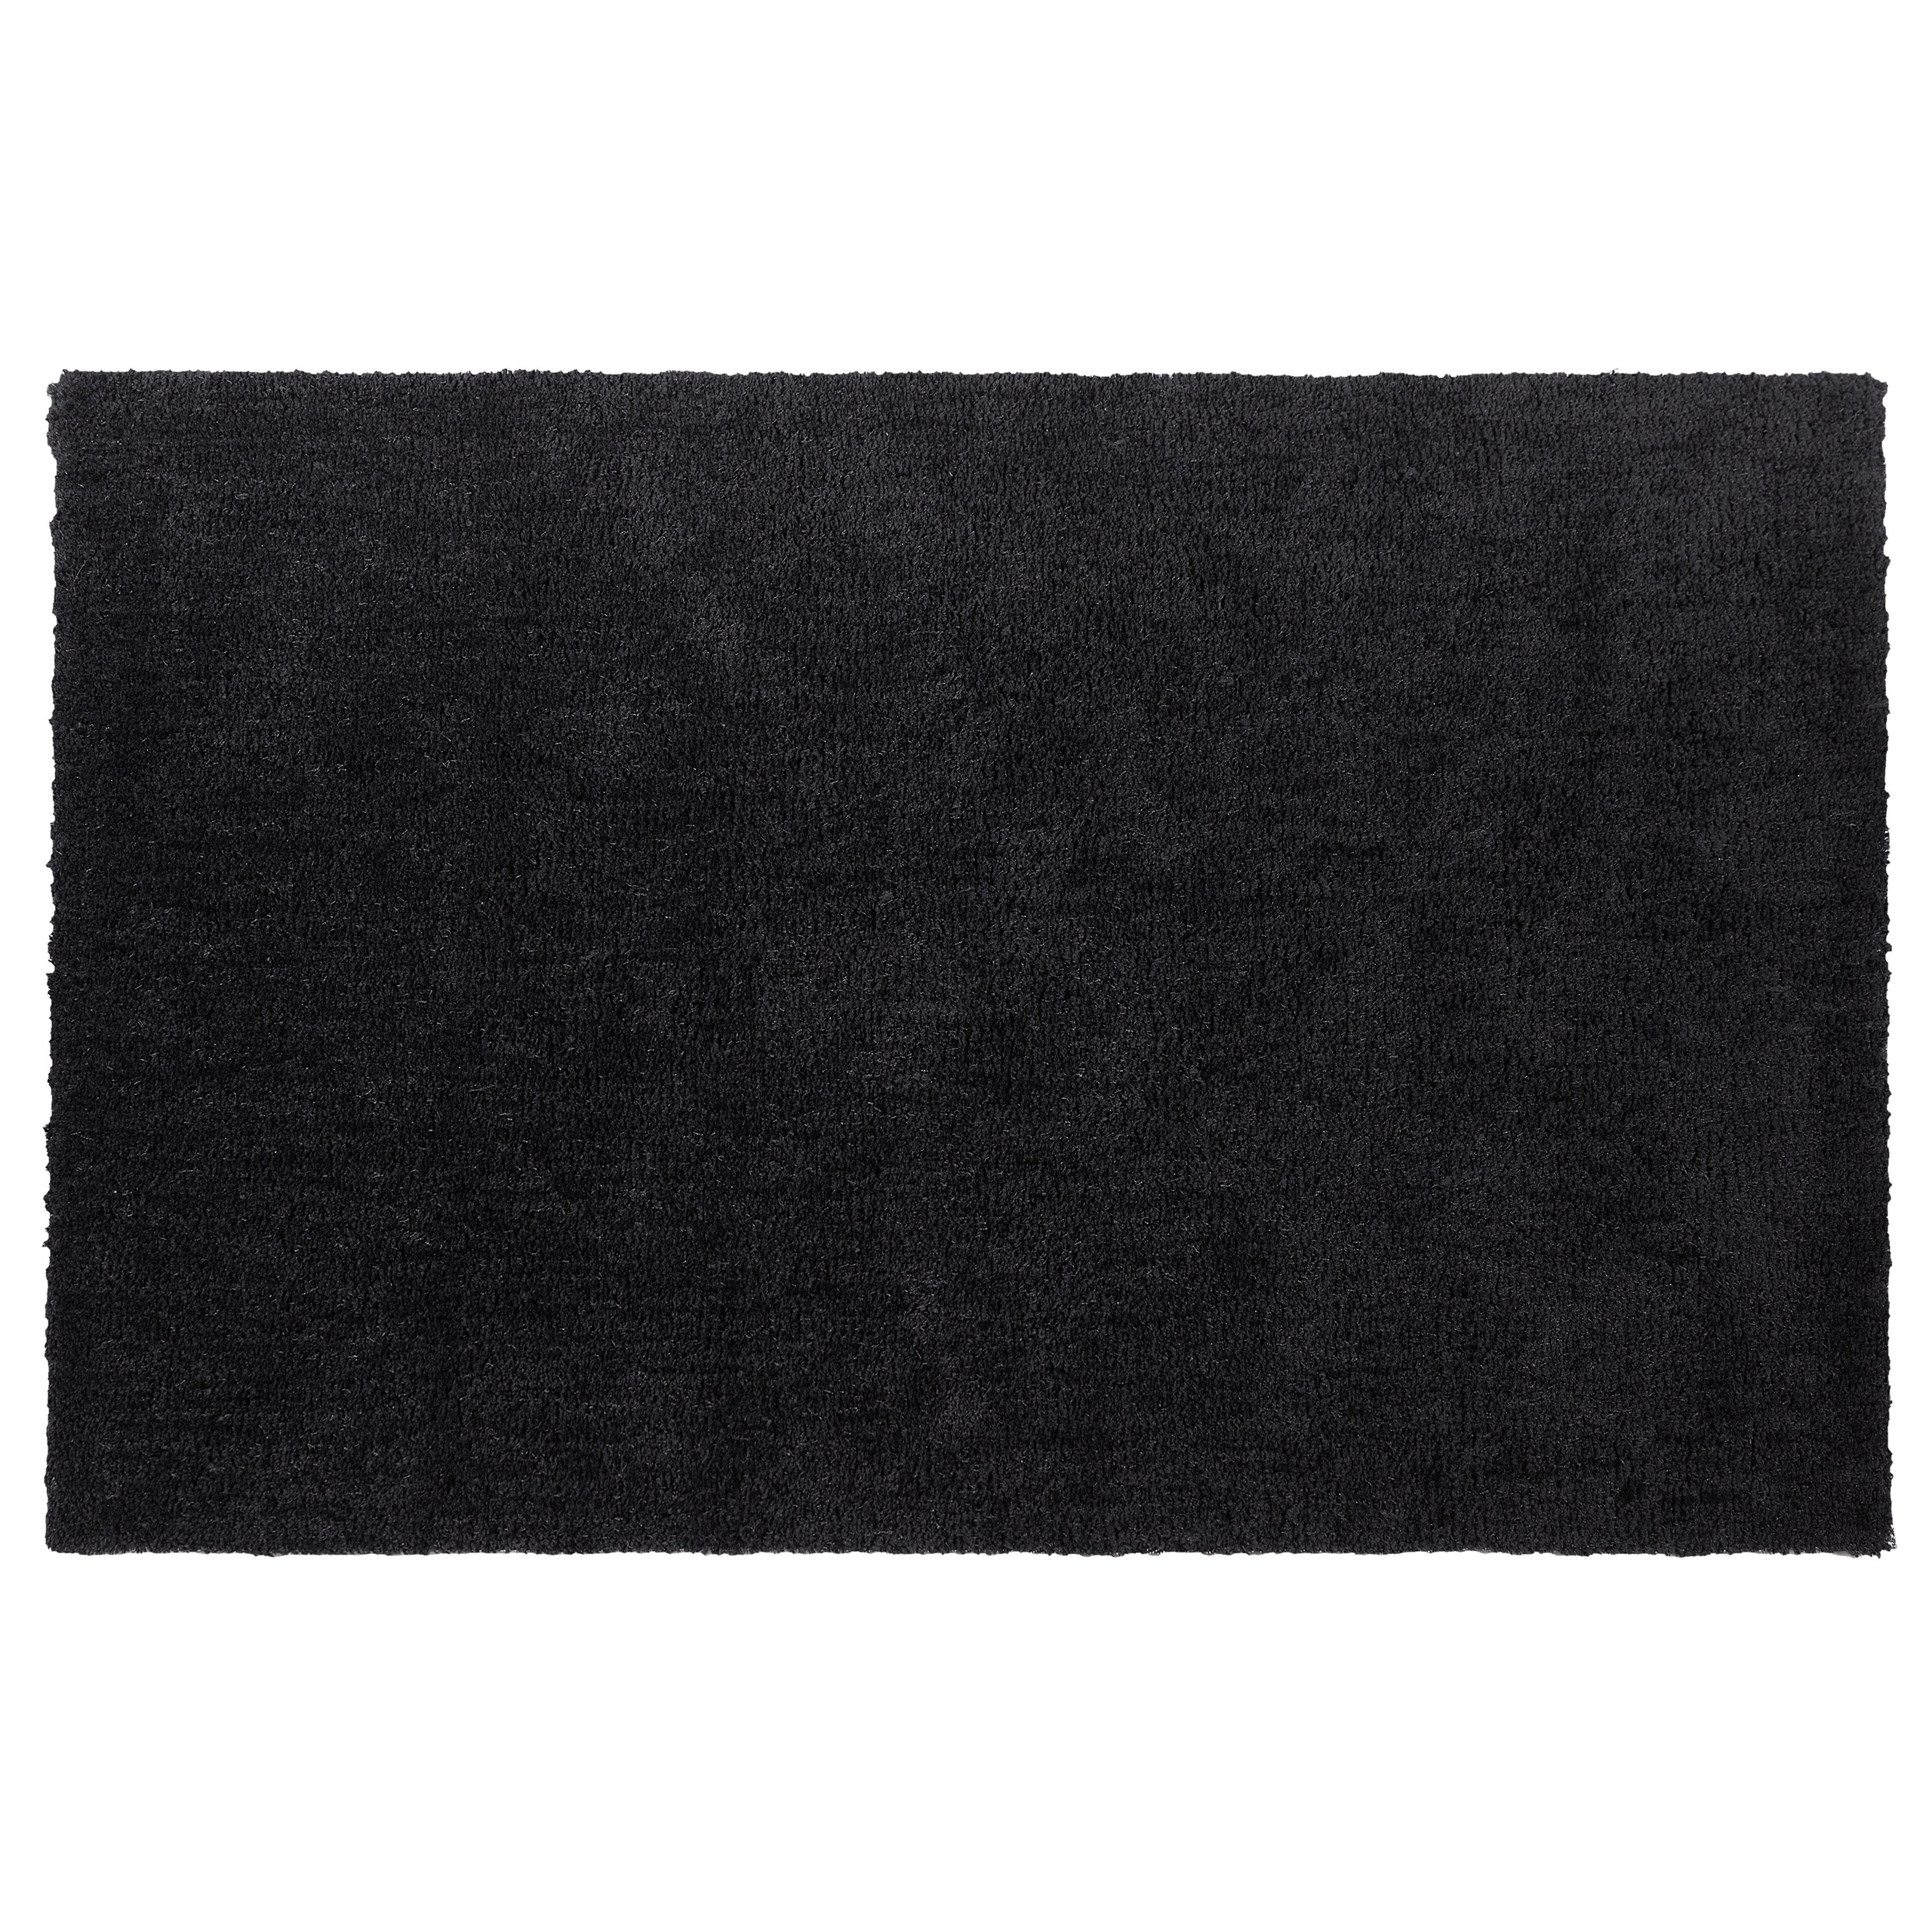 Beliani Shaggy Area Rug Black 200 x 300 cm Modern High-Pile Handmade Tufted Rectangular Carpet